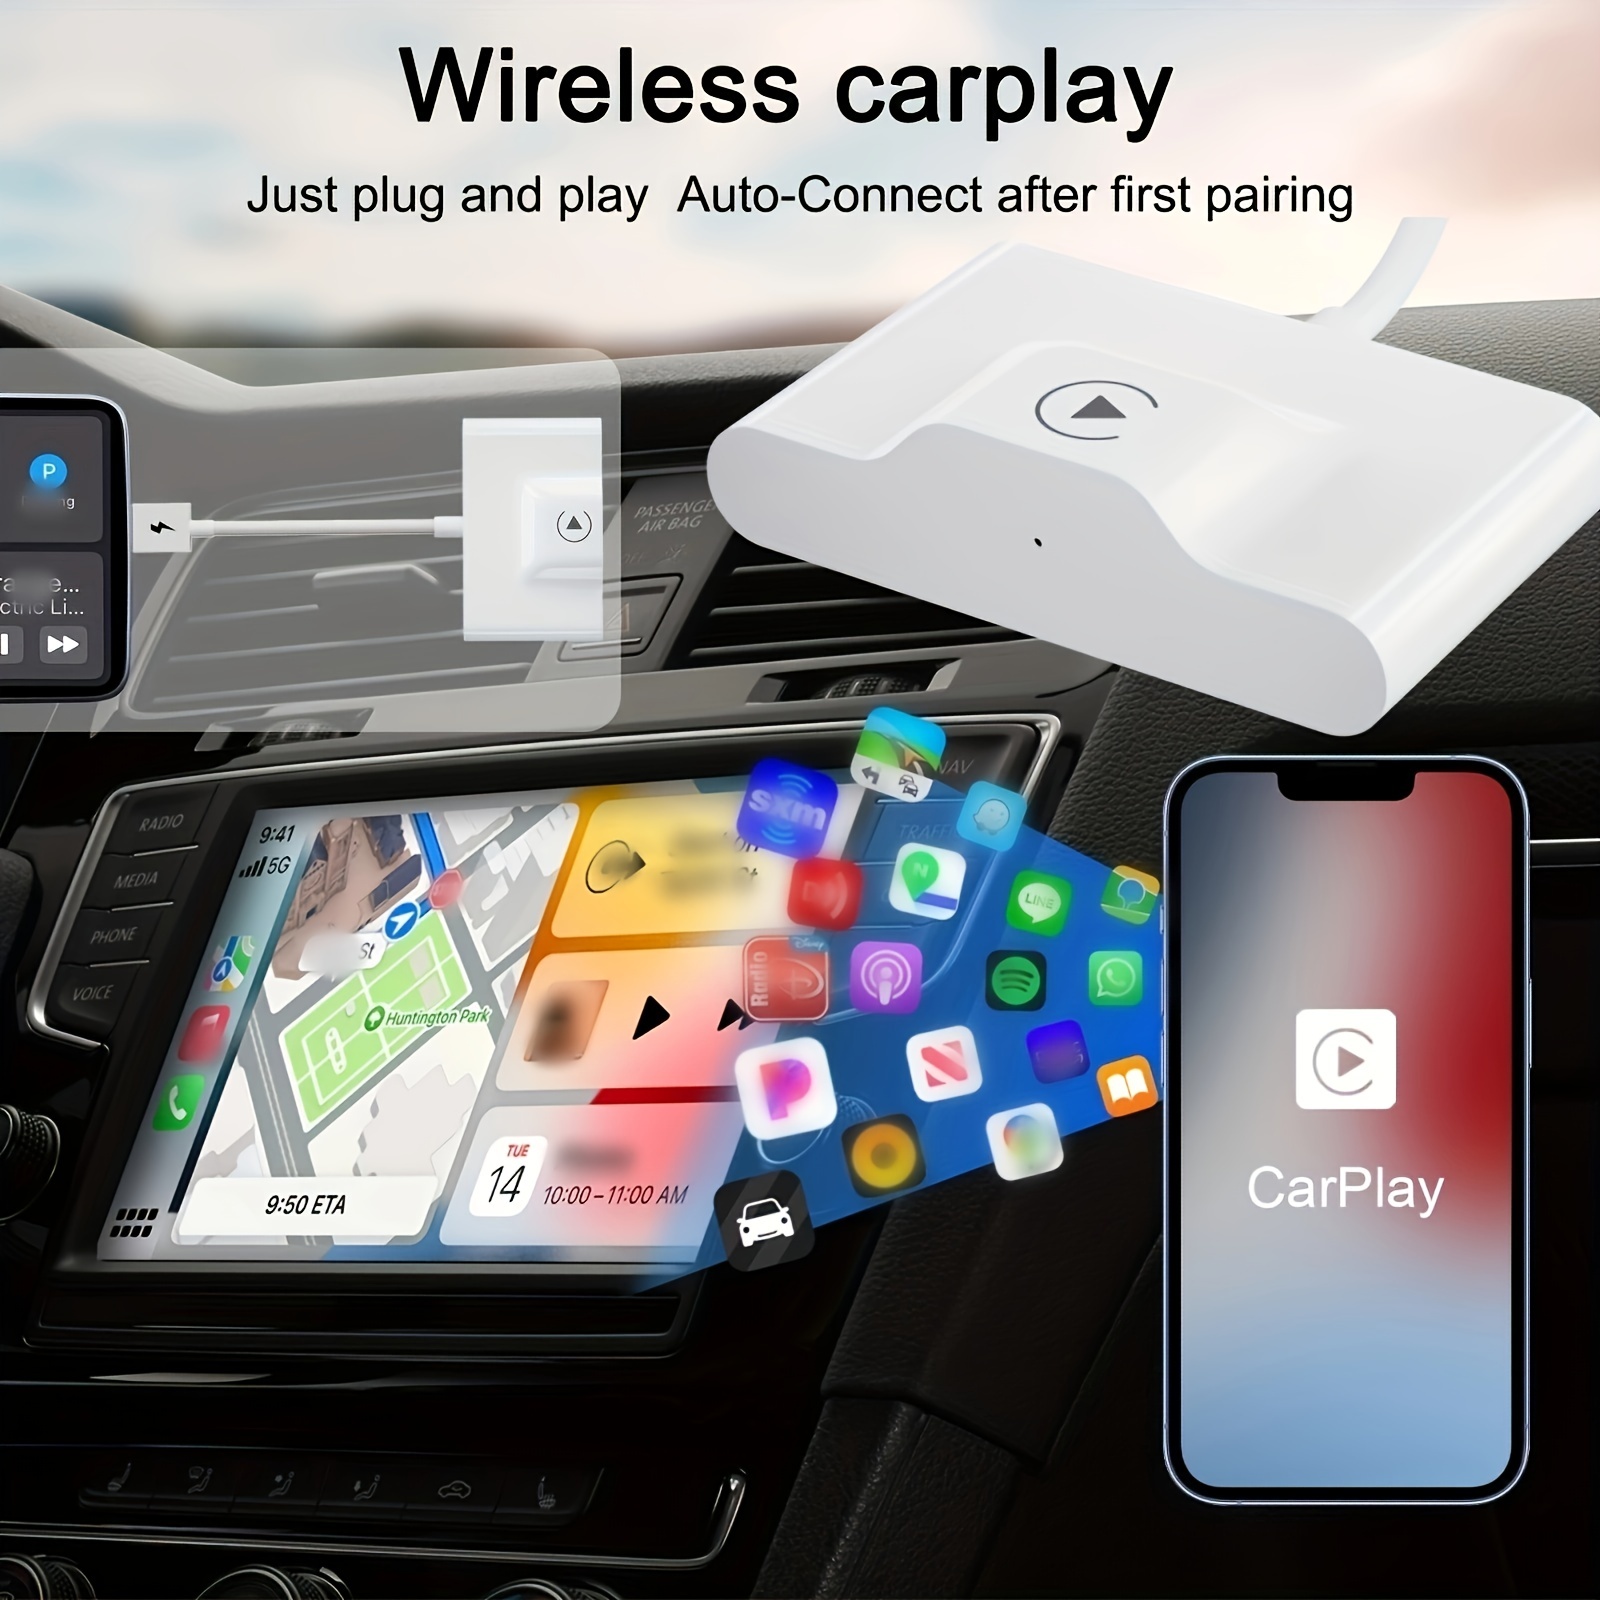 CarPlay Adaptateur sans Fil pour iPhone, Dongle CarPlay sans Fil